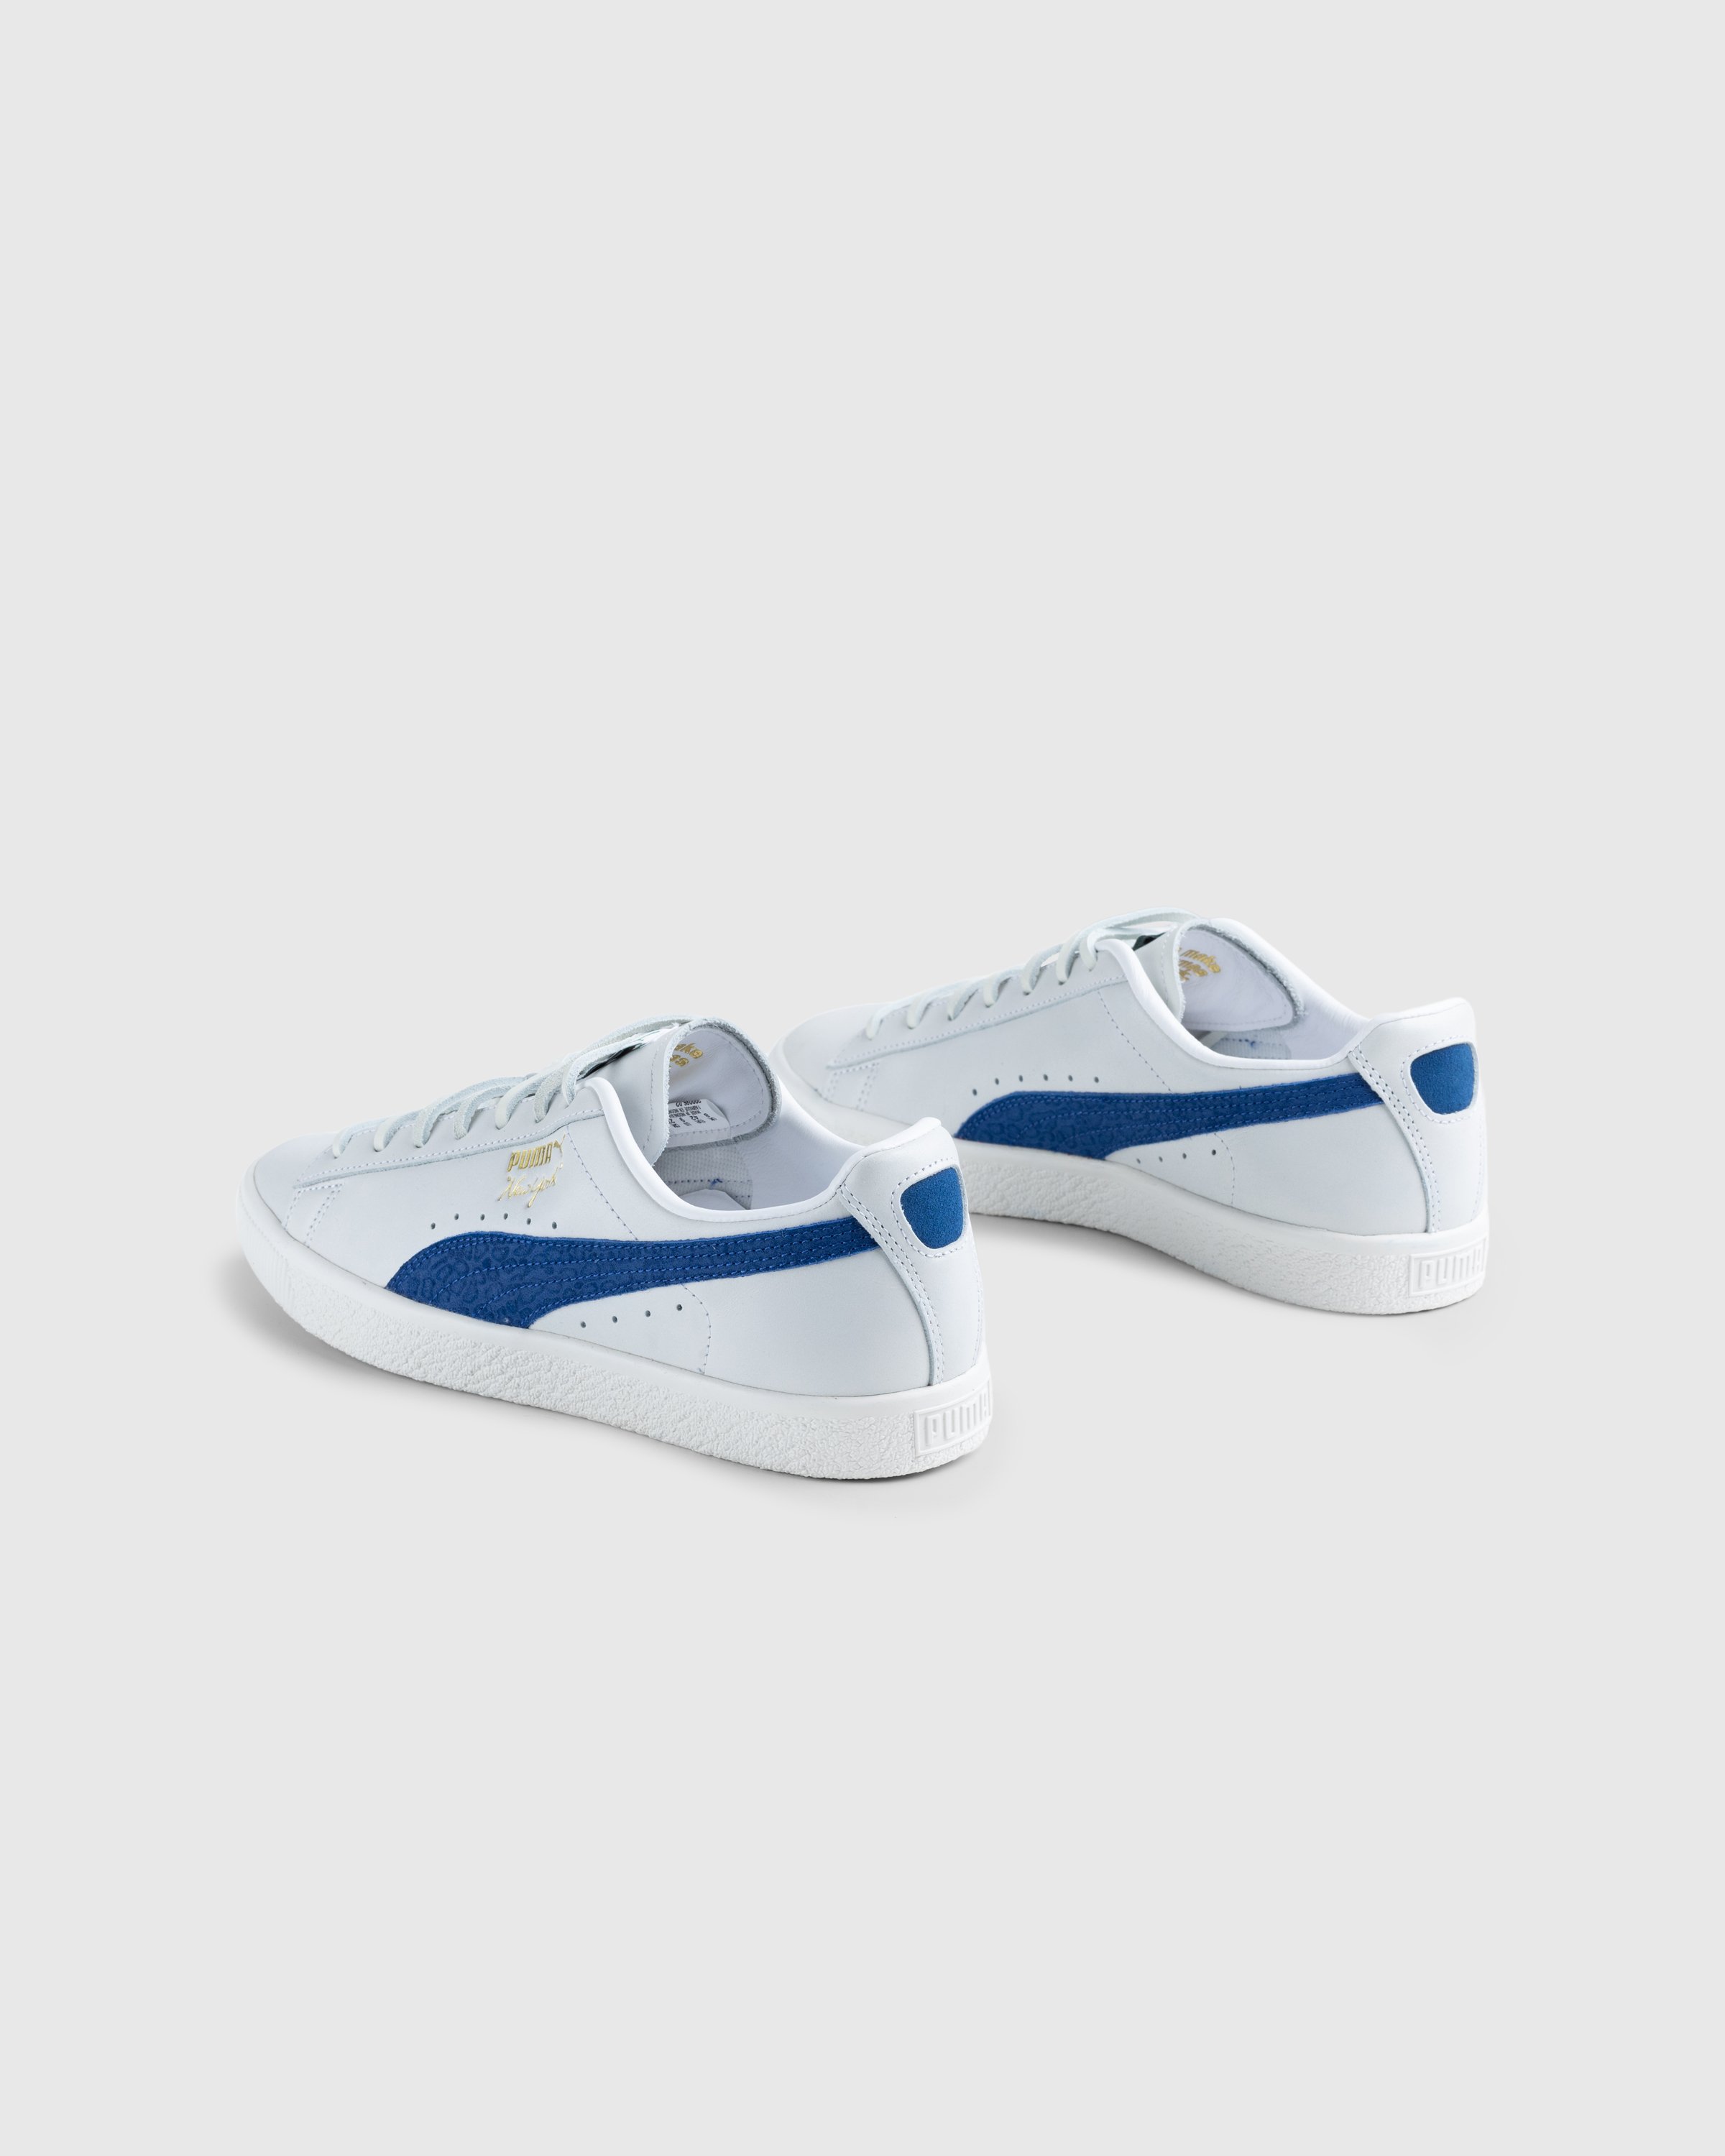 Puma - Clyde Soho (NYC) - Footwear - White - Image 4